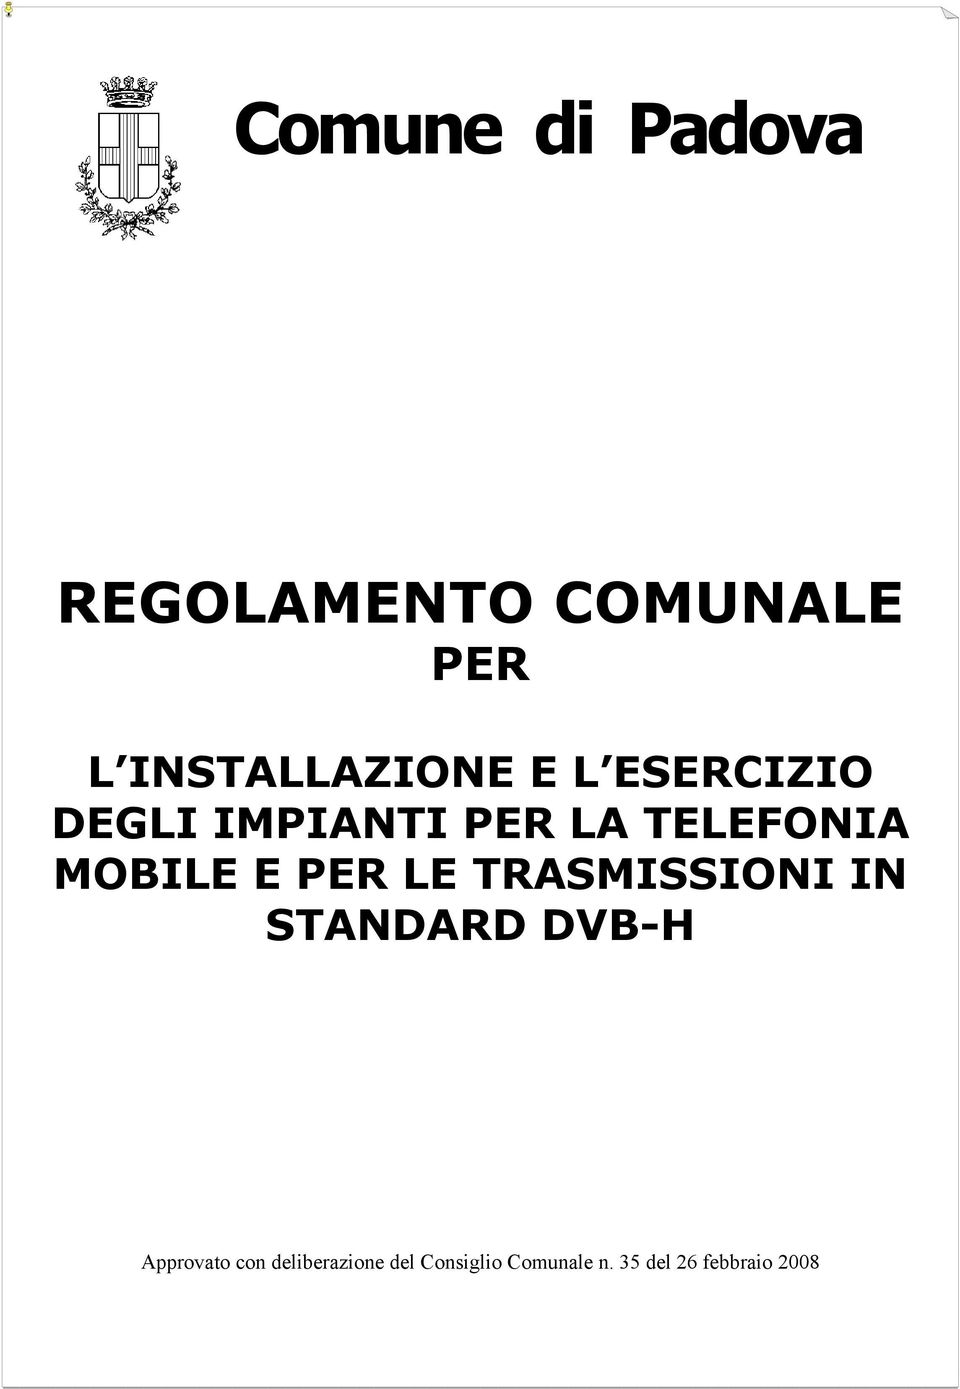 TELEFONIA MOBILE E PER LE TRASMISSIONI IN STANDARD DVB-H